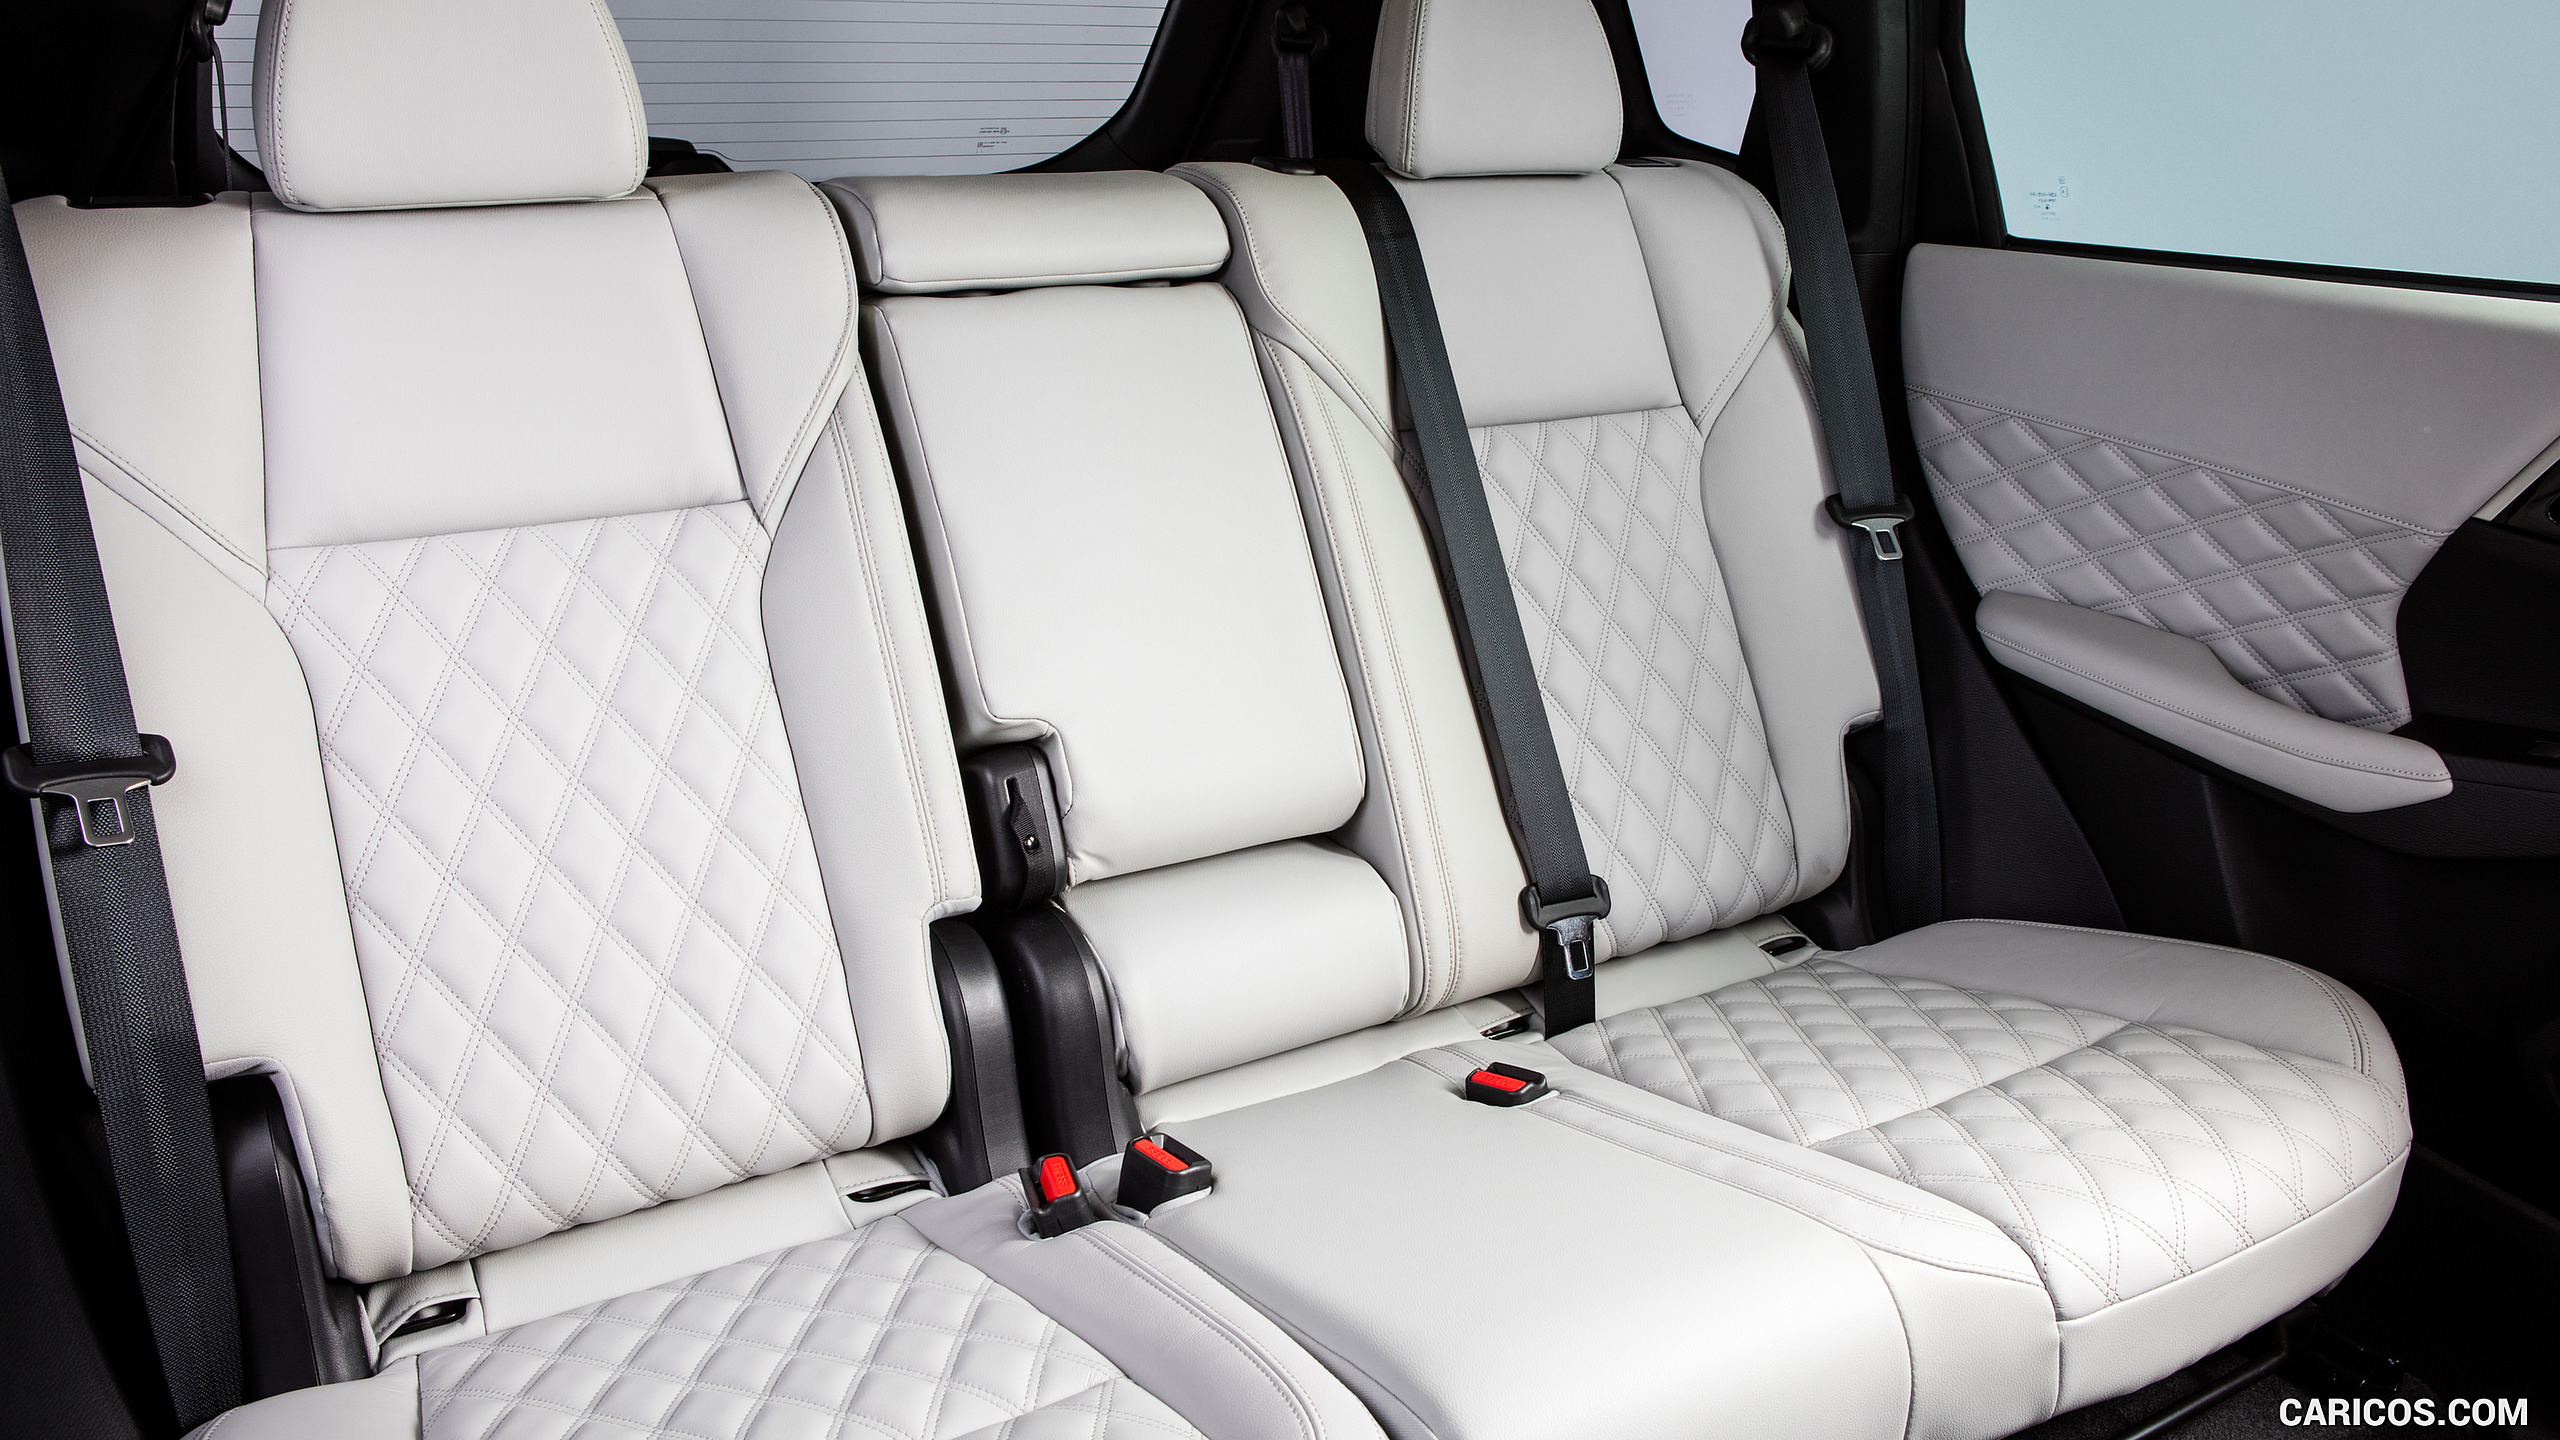 2022 Mitsubishi Outlander - Interior, Rear Seats, #42 of 89